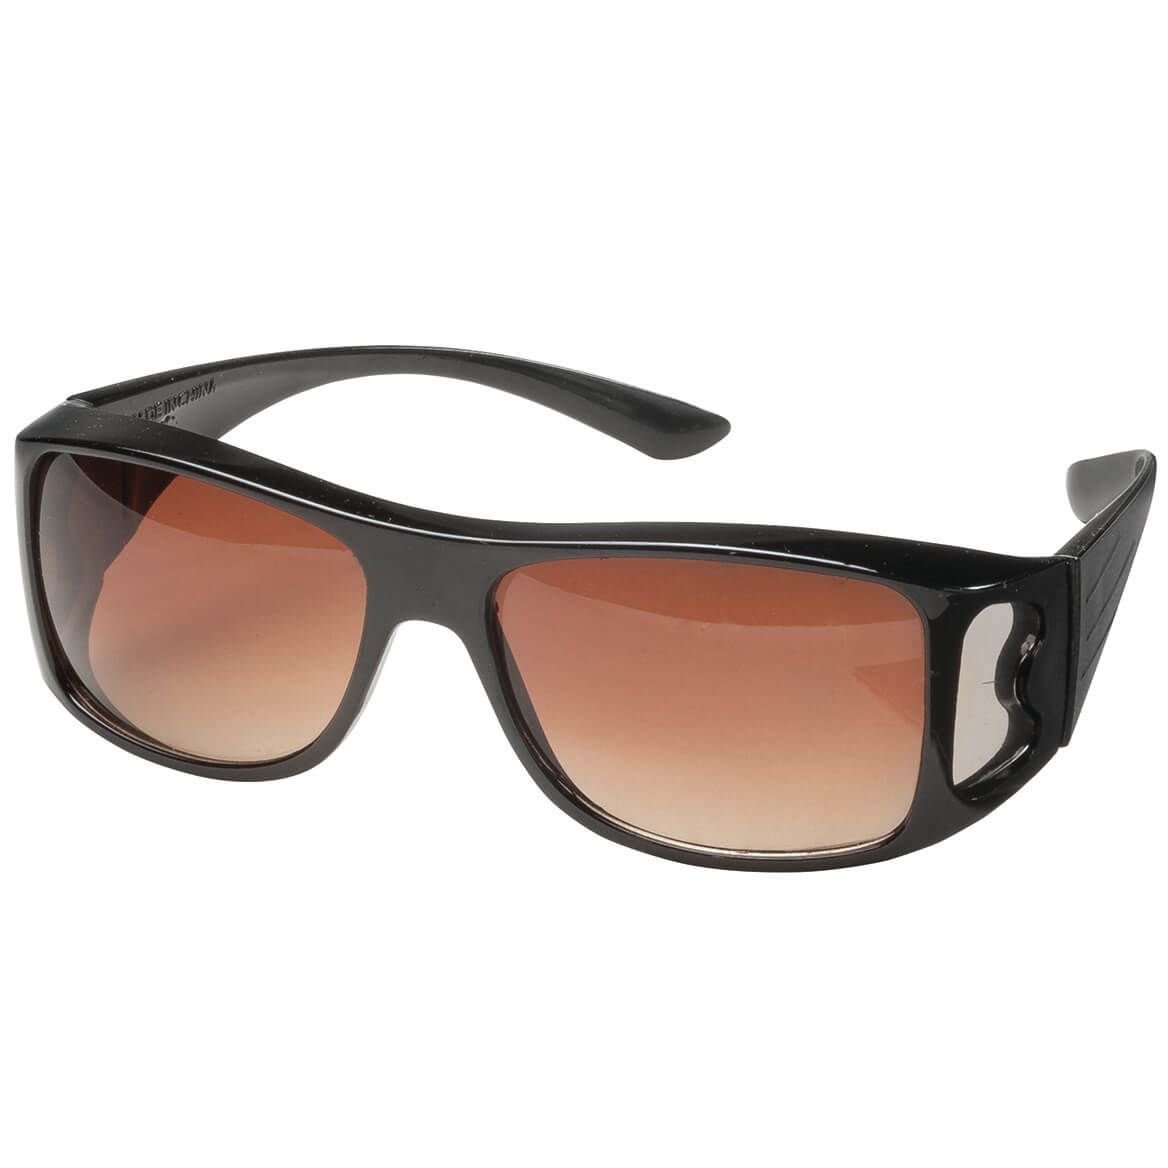 Clear View Wraparound Sunglasses + '-' + 345672